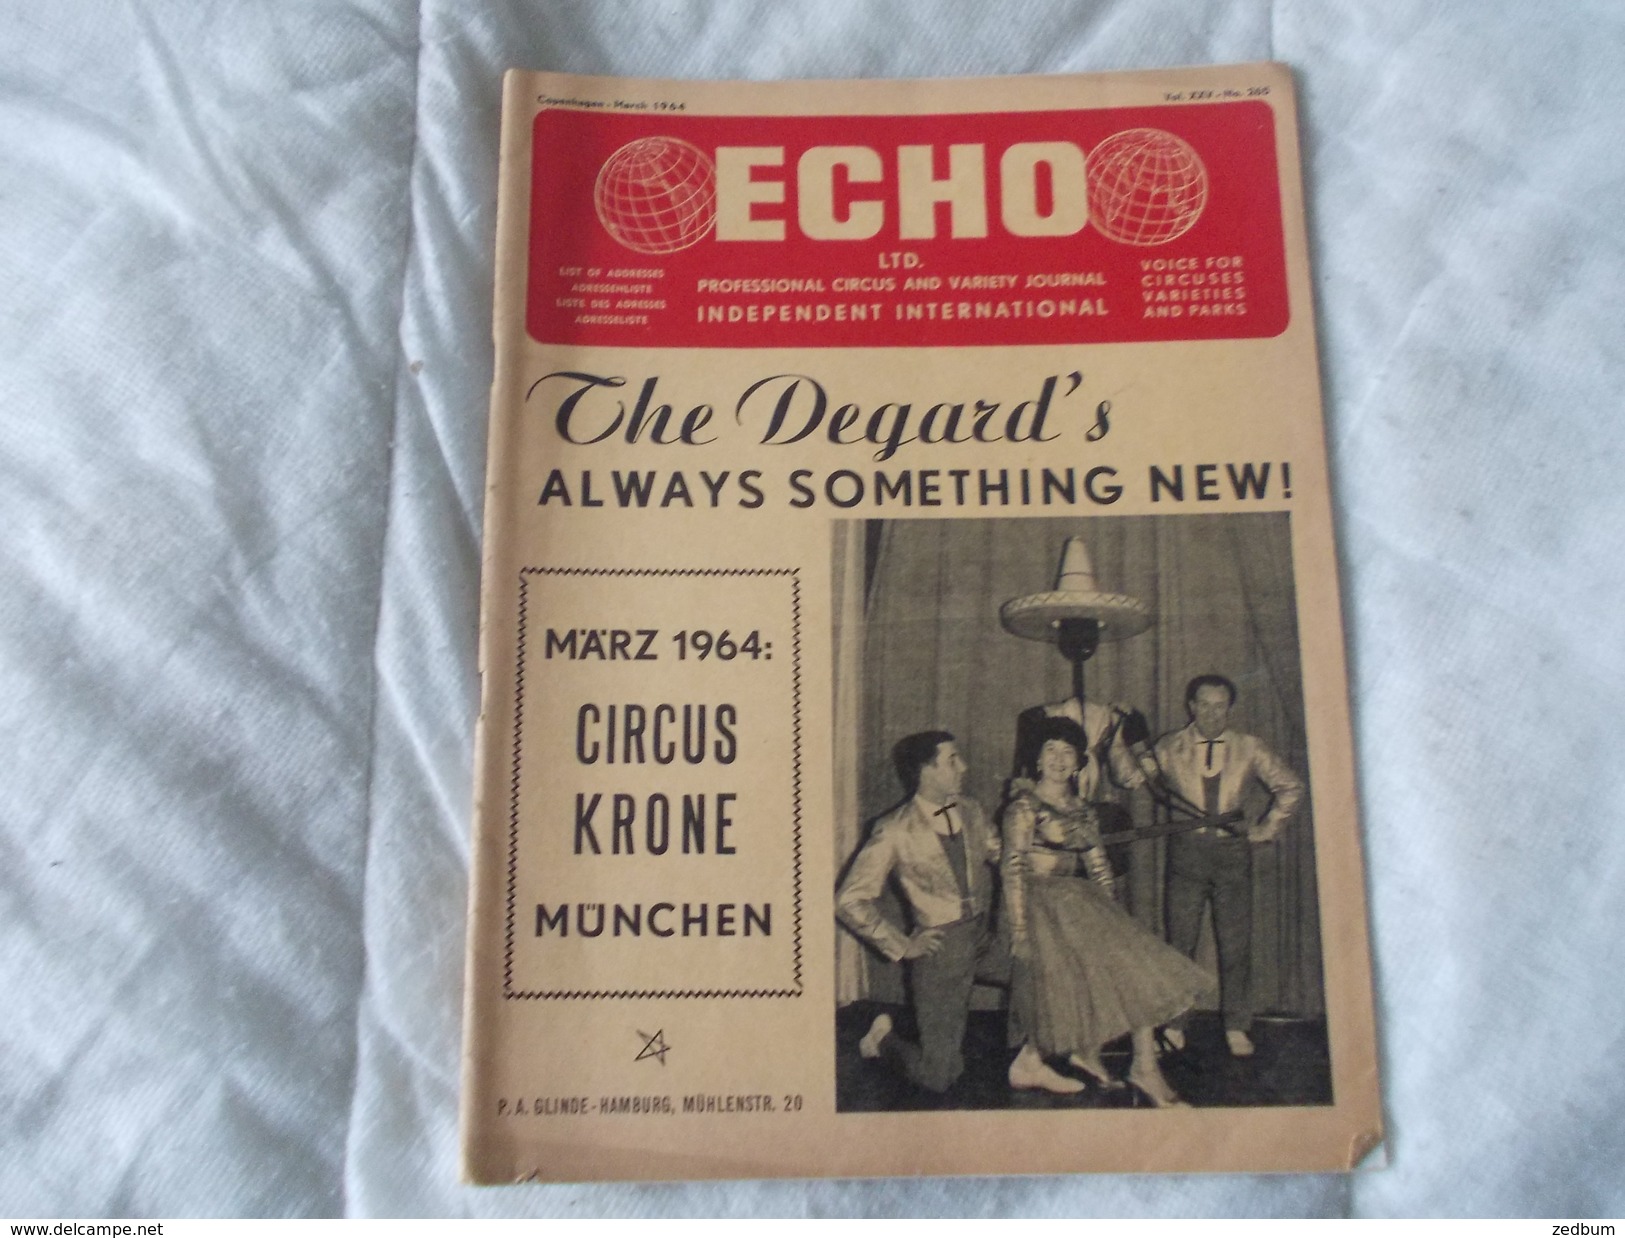 ECHO LTD Professional Circus And Variety Journal Independent International N° 265 March 1964 - Unterhaltung